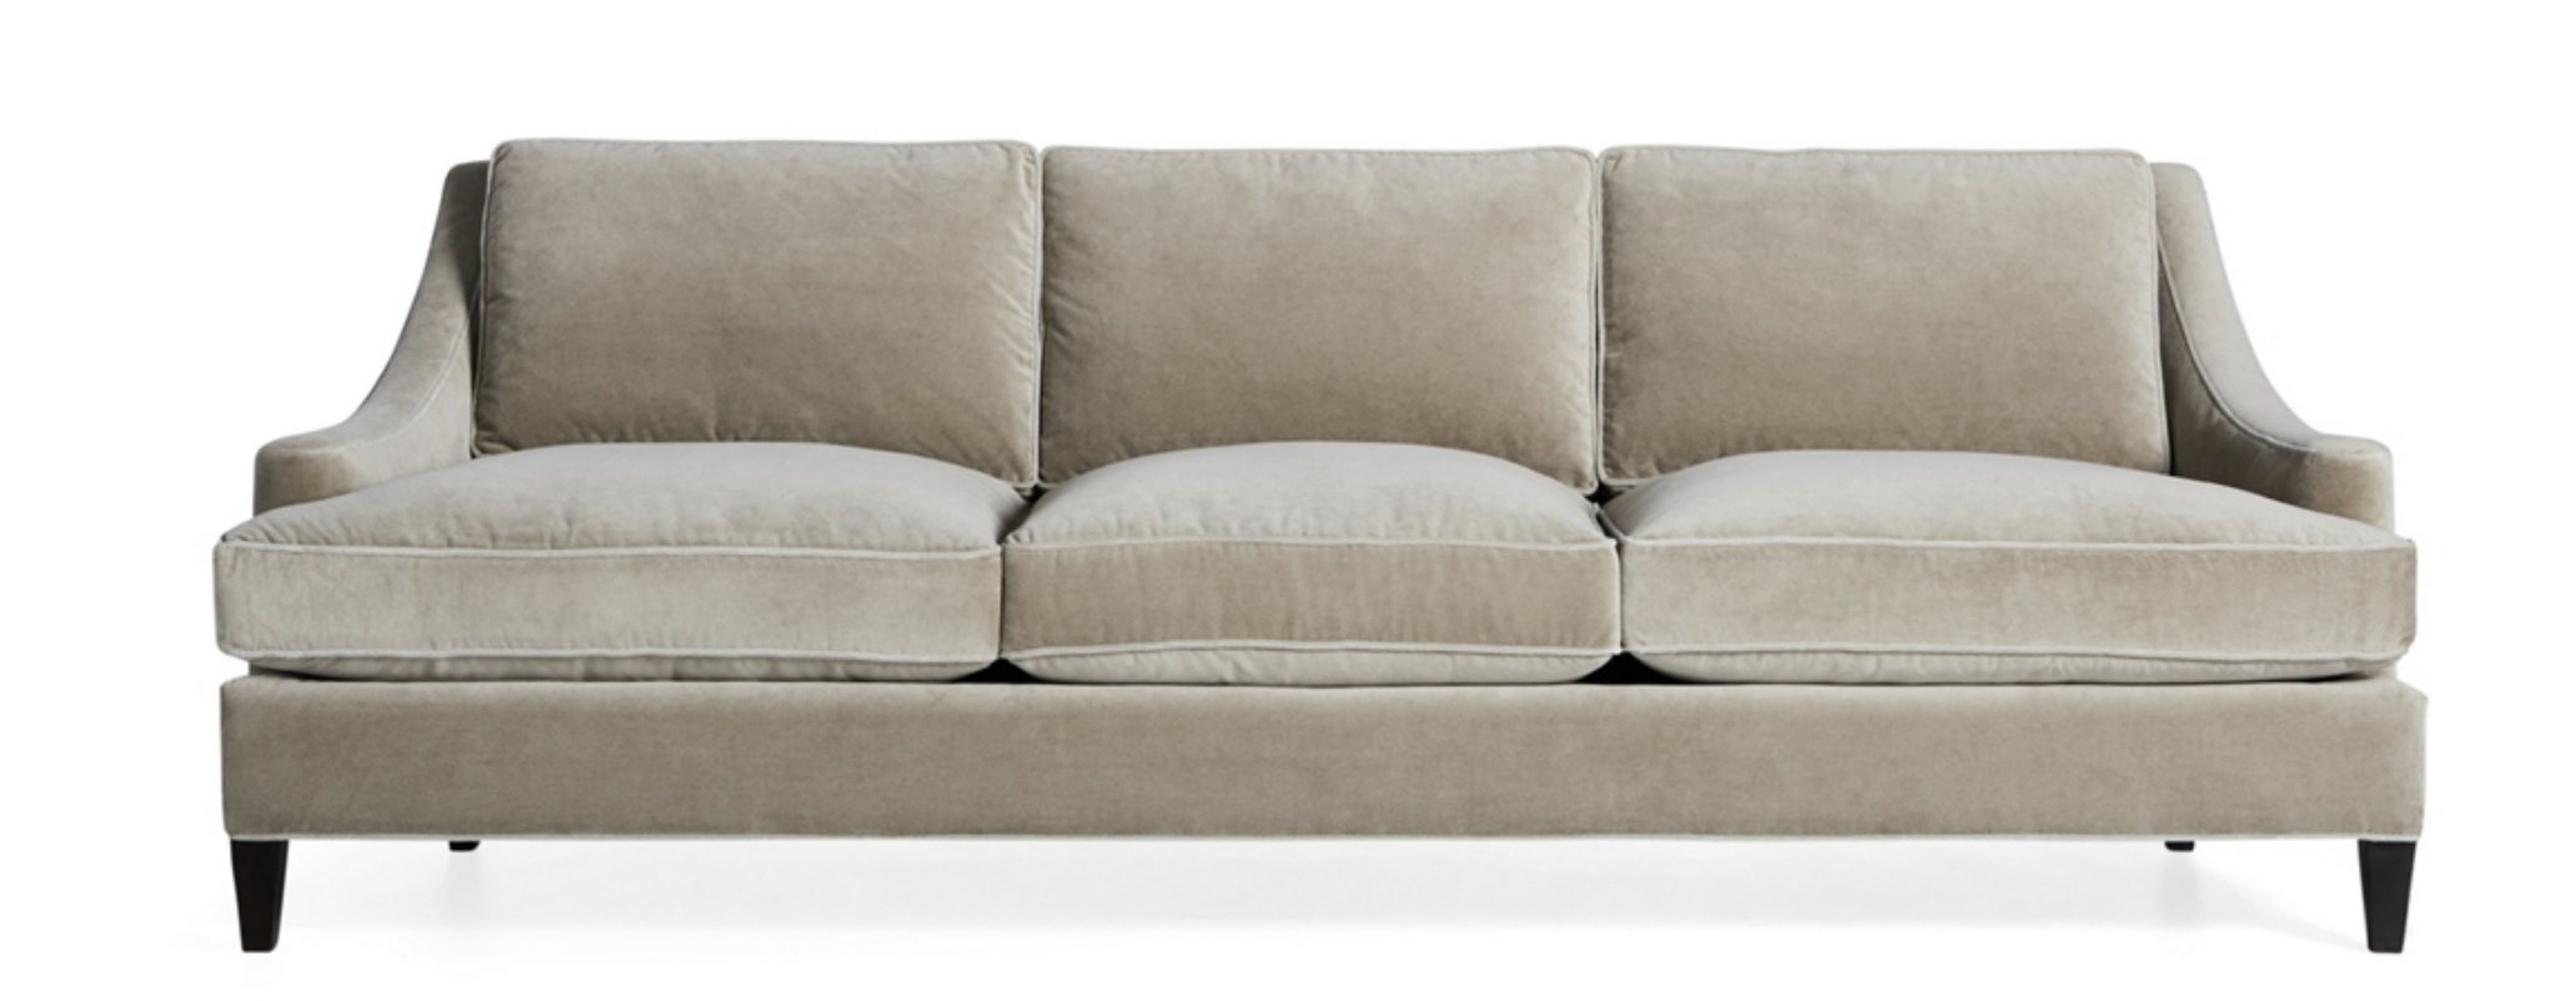 roxy sofa - Arhaus